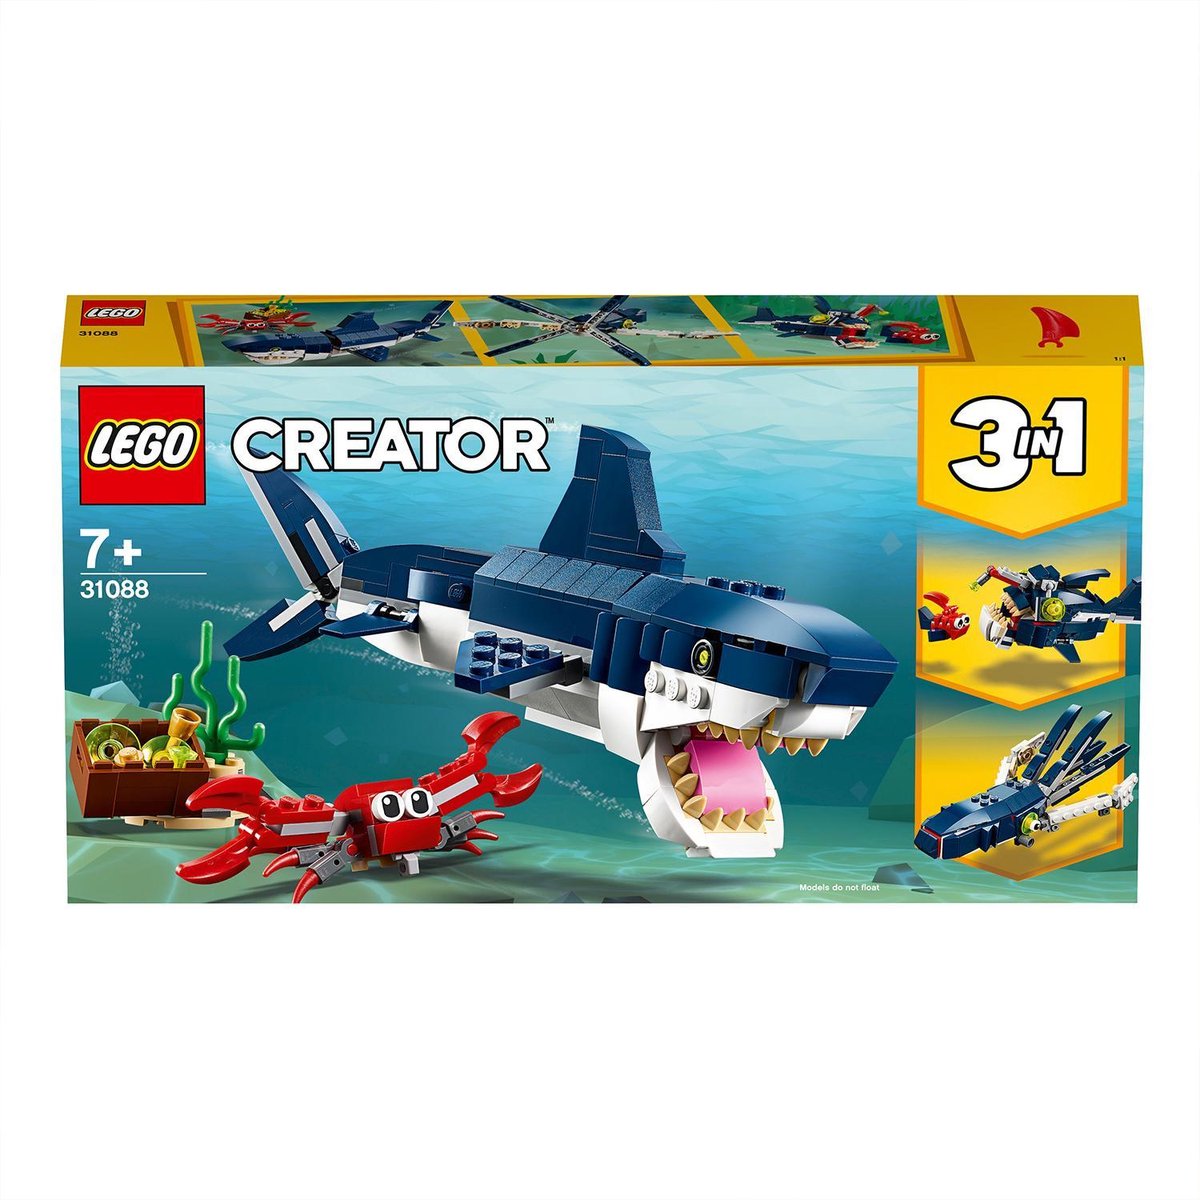 Deep Sea Creatures LEGO Creator - 31088

Deep Sea Creatures LEGO Creator